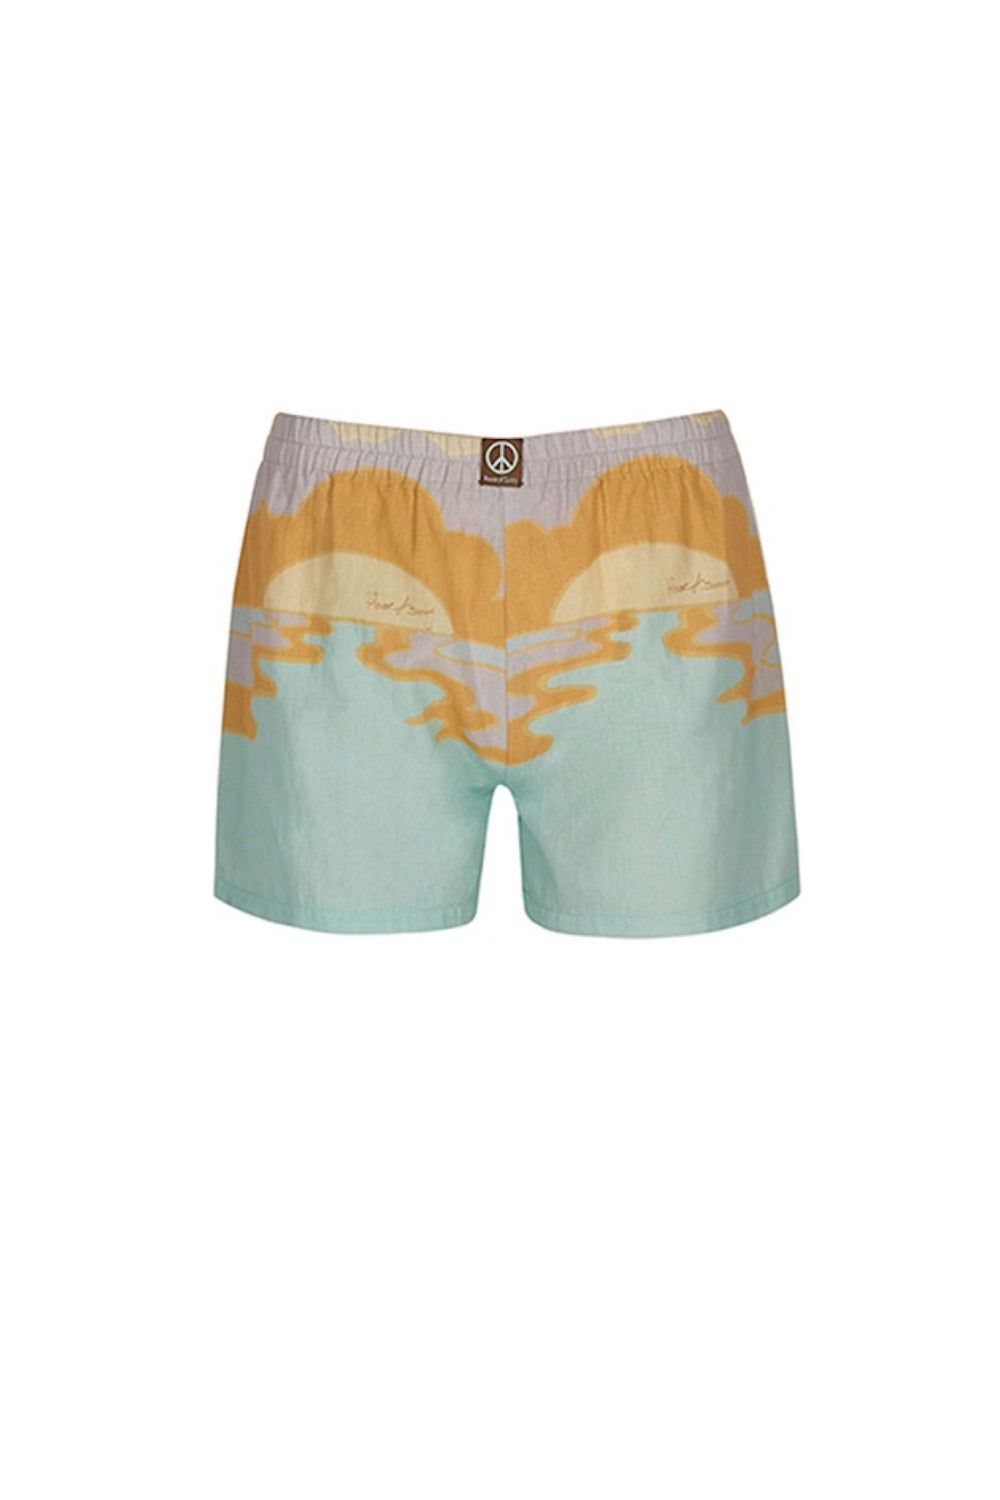 Hawaiian Day Tripper Boxer Shorts